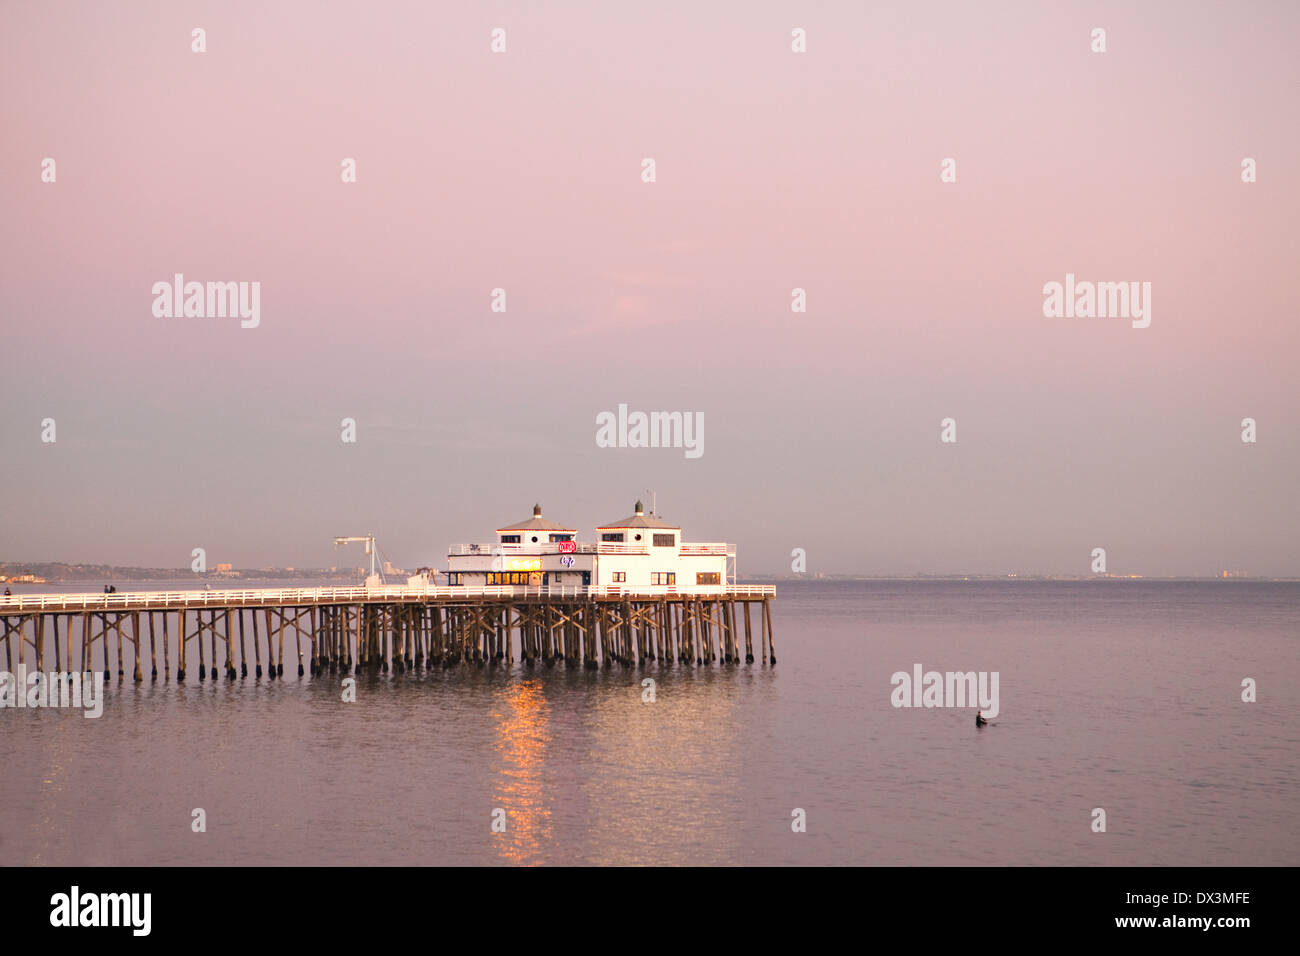 Malibu pier over ocean seascape at sunset, California, United States Stock Photo